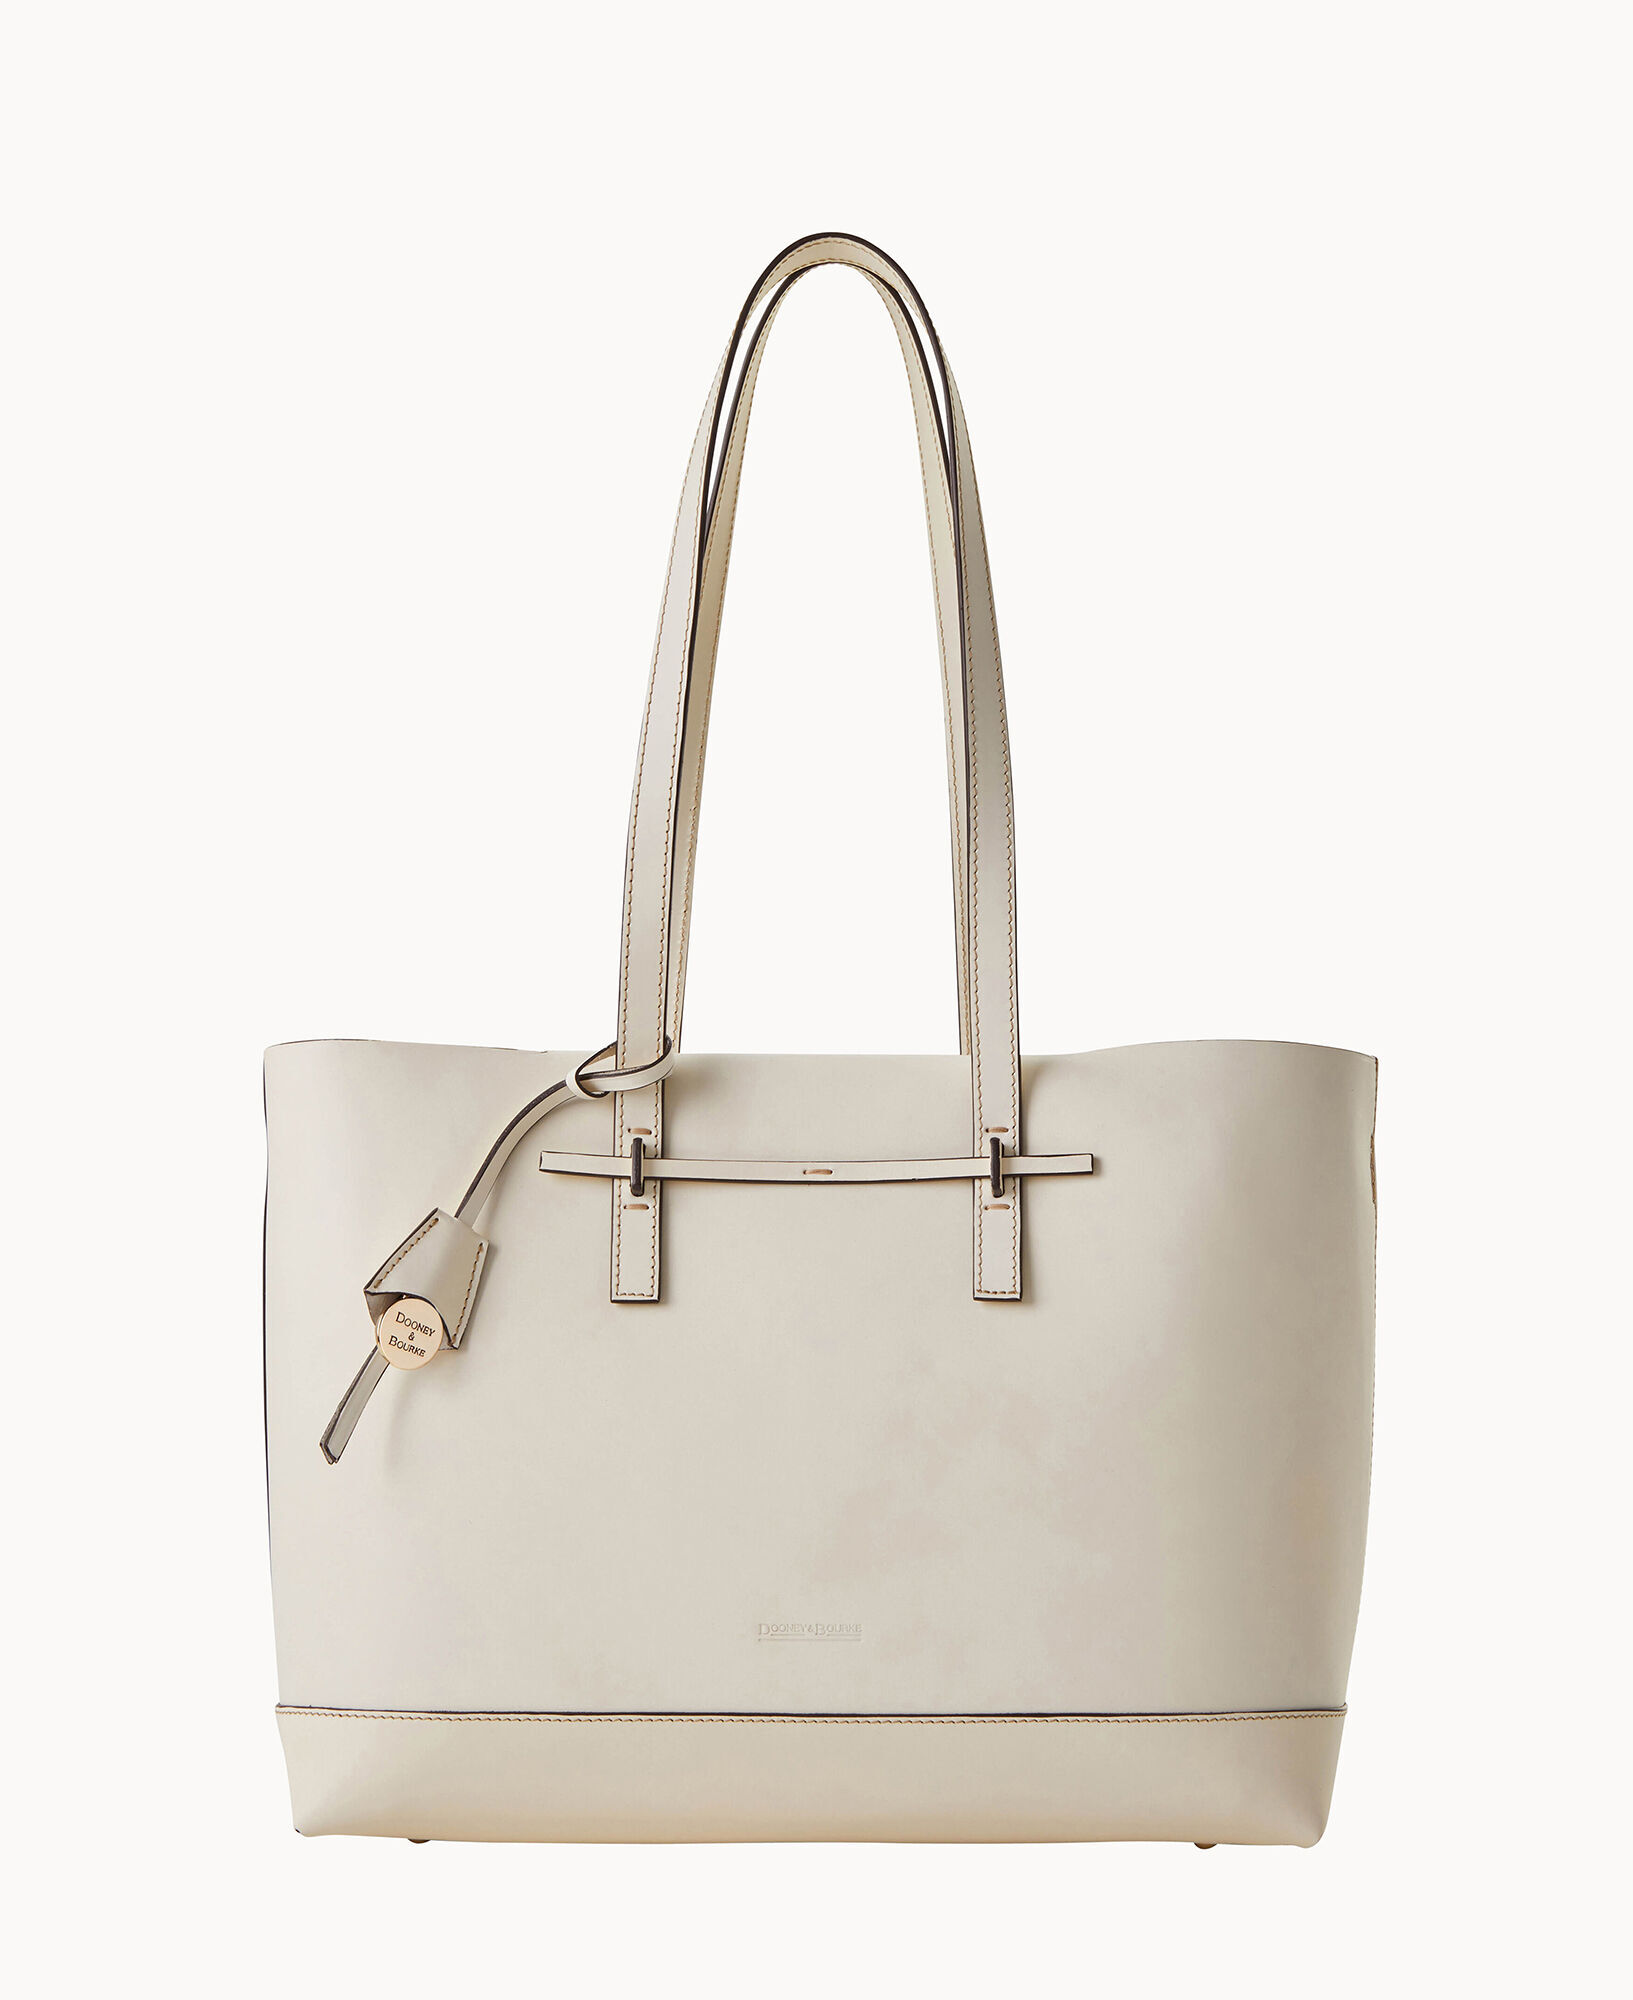 Dooney & Bourke Alto Camilla  Bags, Leather handbags, Fashion bags